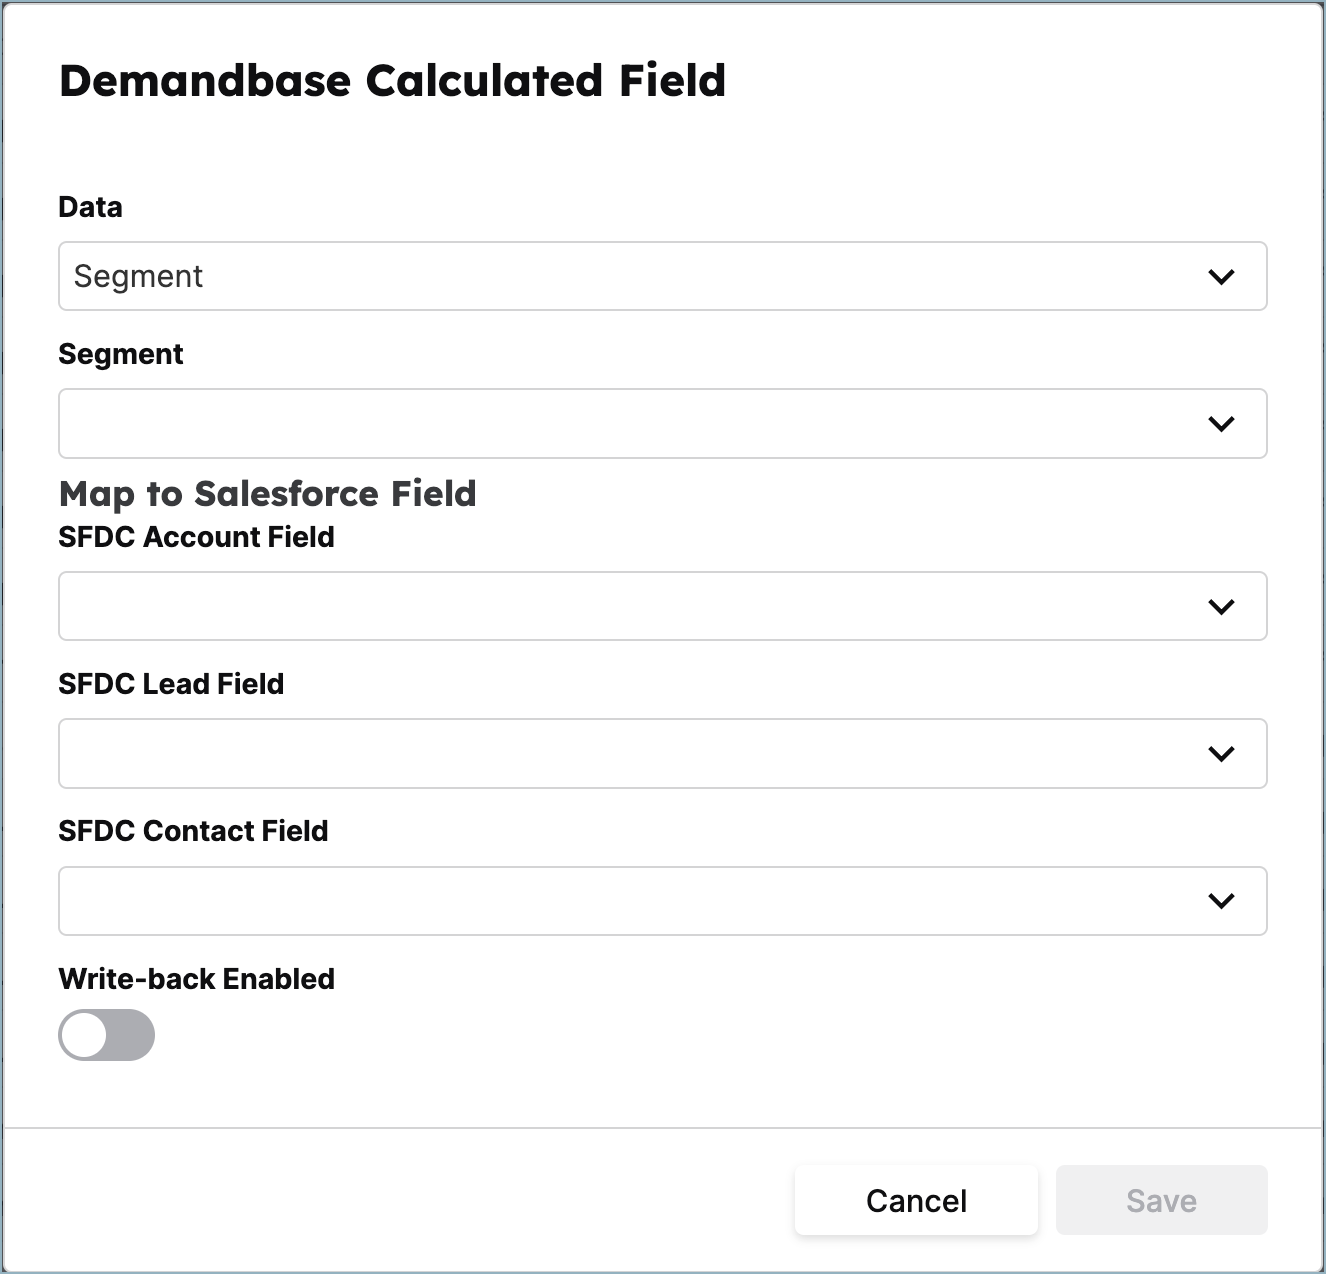 Demandbase_Calculated_Field_Segment_N.png